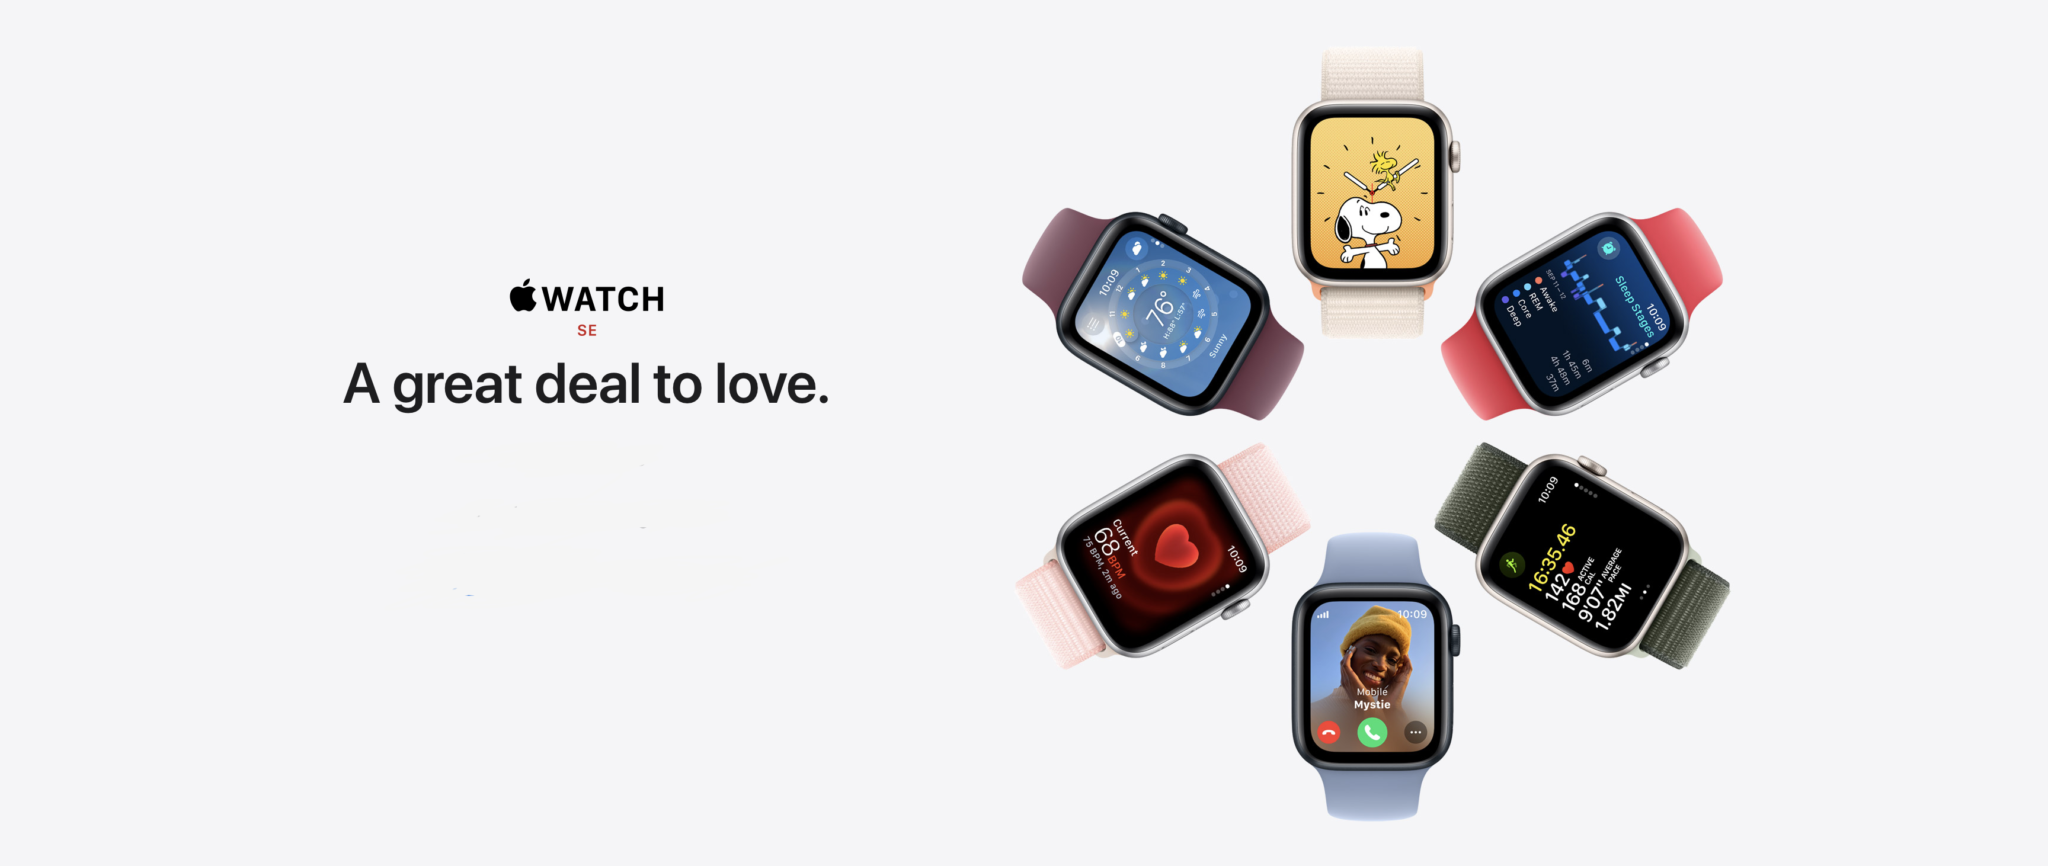 Apple Watch SE price in Nigeria Lagos Abuja